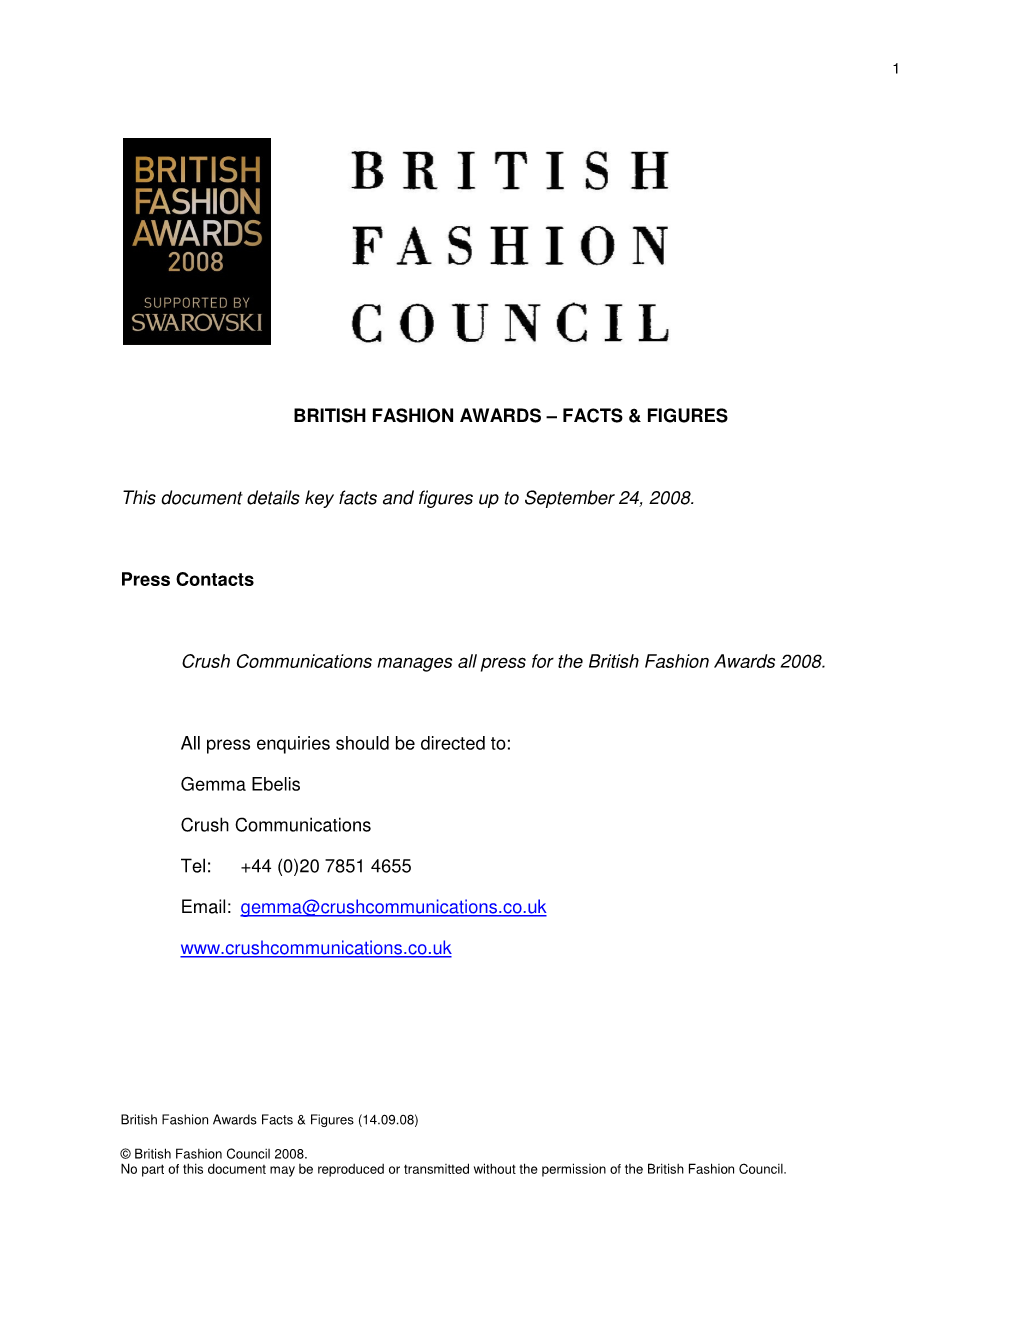 British Fashion Awards – Facts & Figures